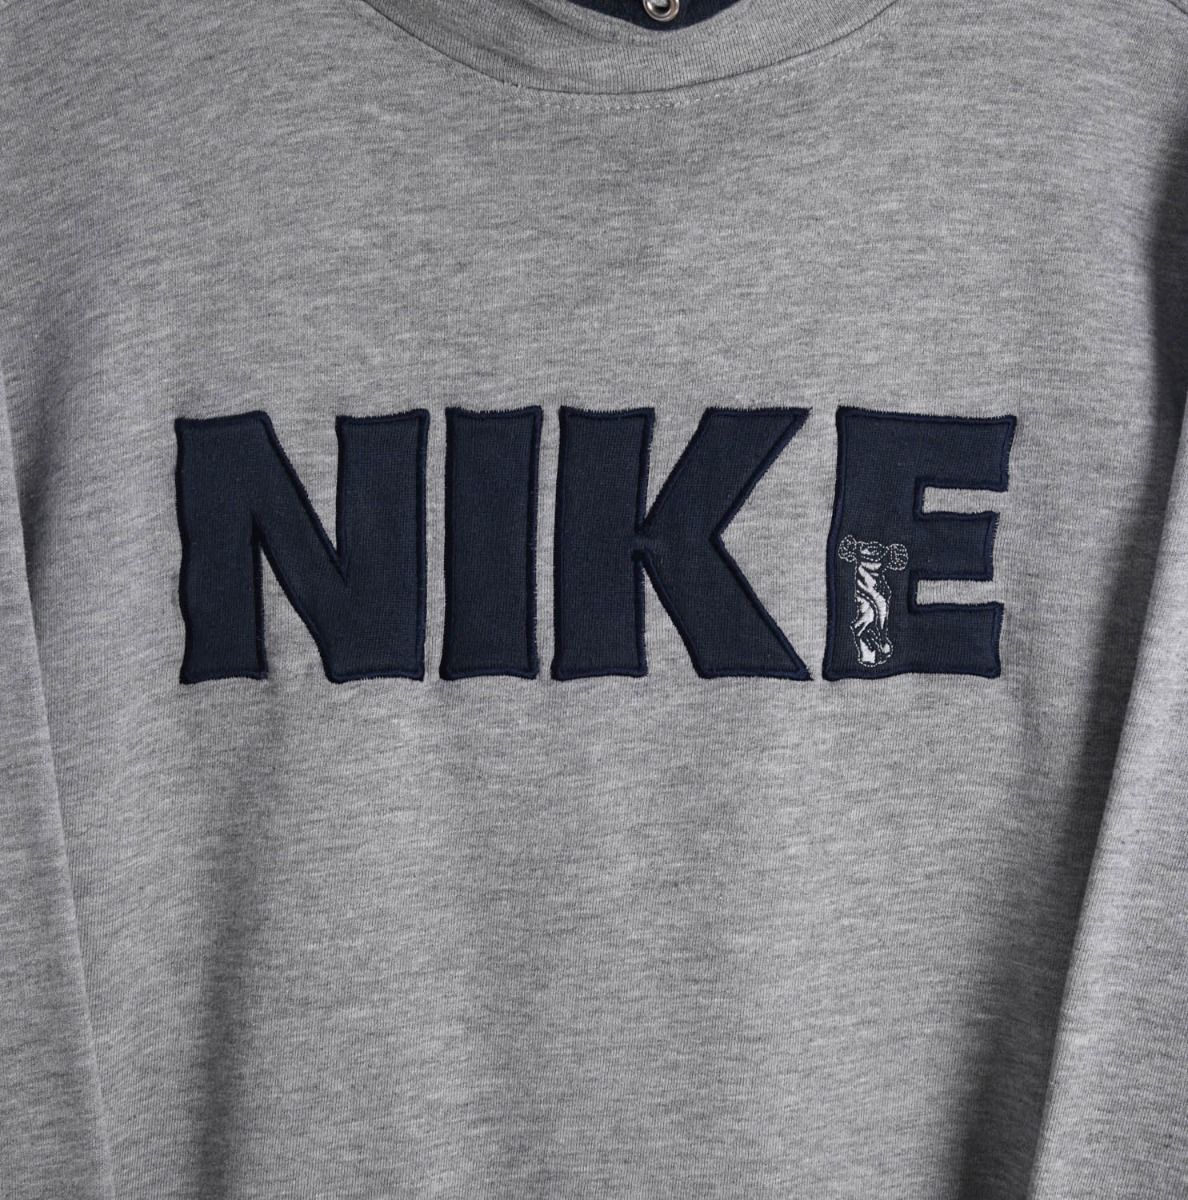 Nike (Cidesport) 1990s Sweatshirt